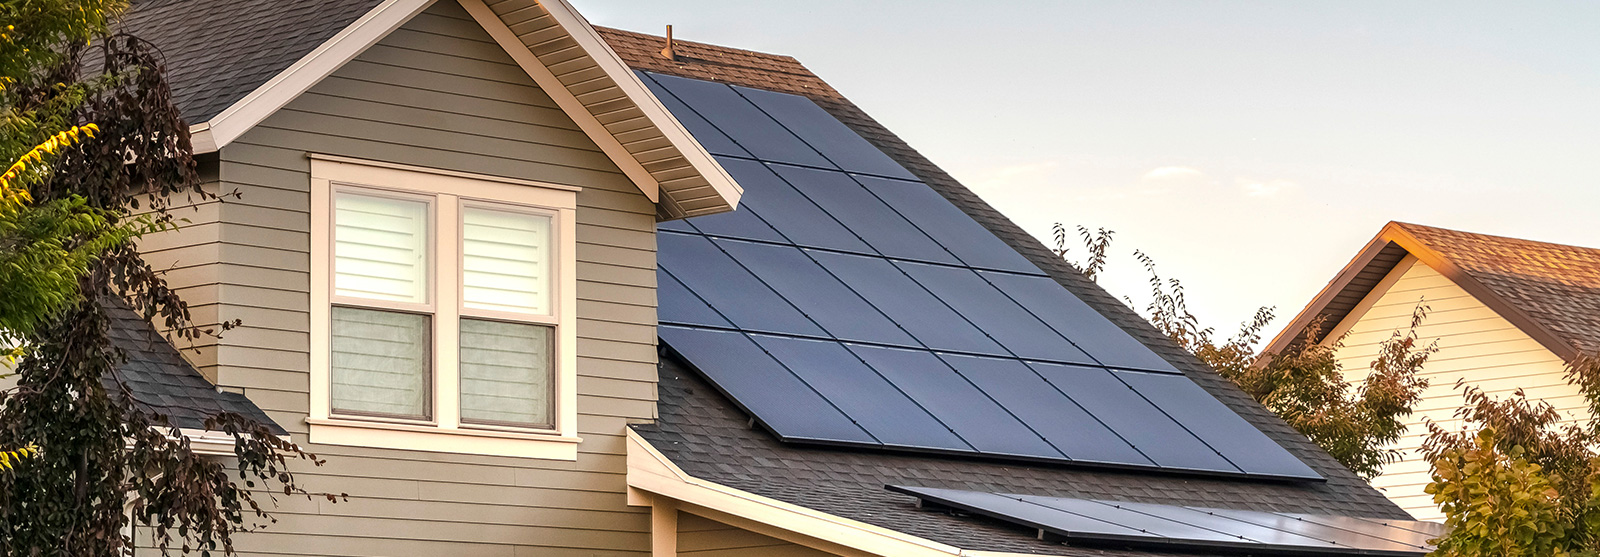 rooftop image of solar panels for solar billing plan